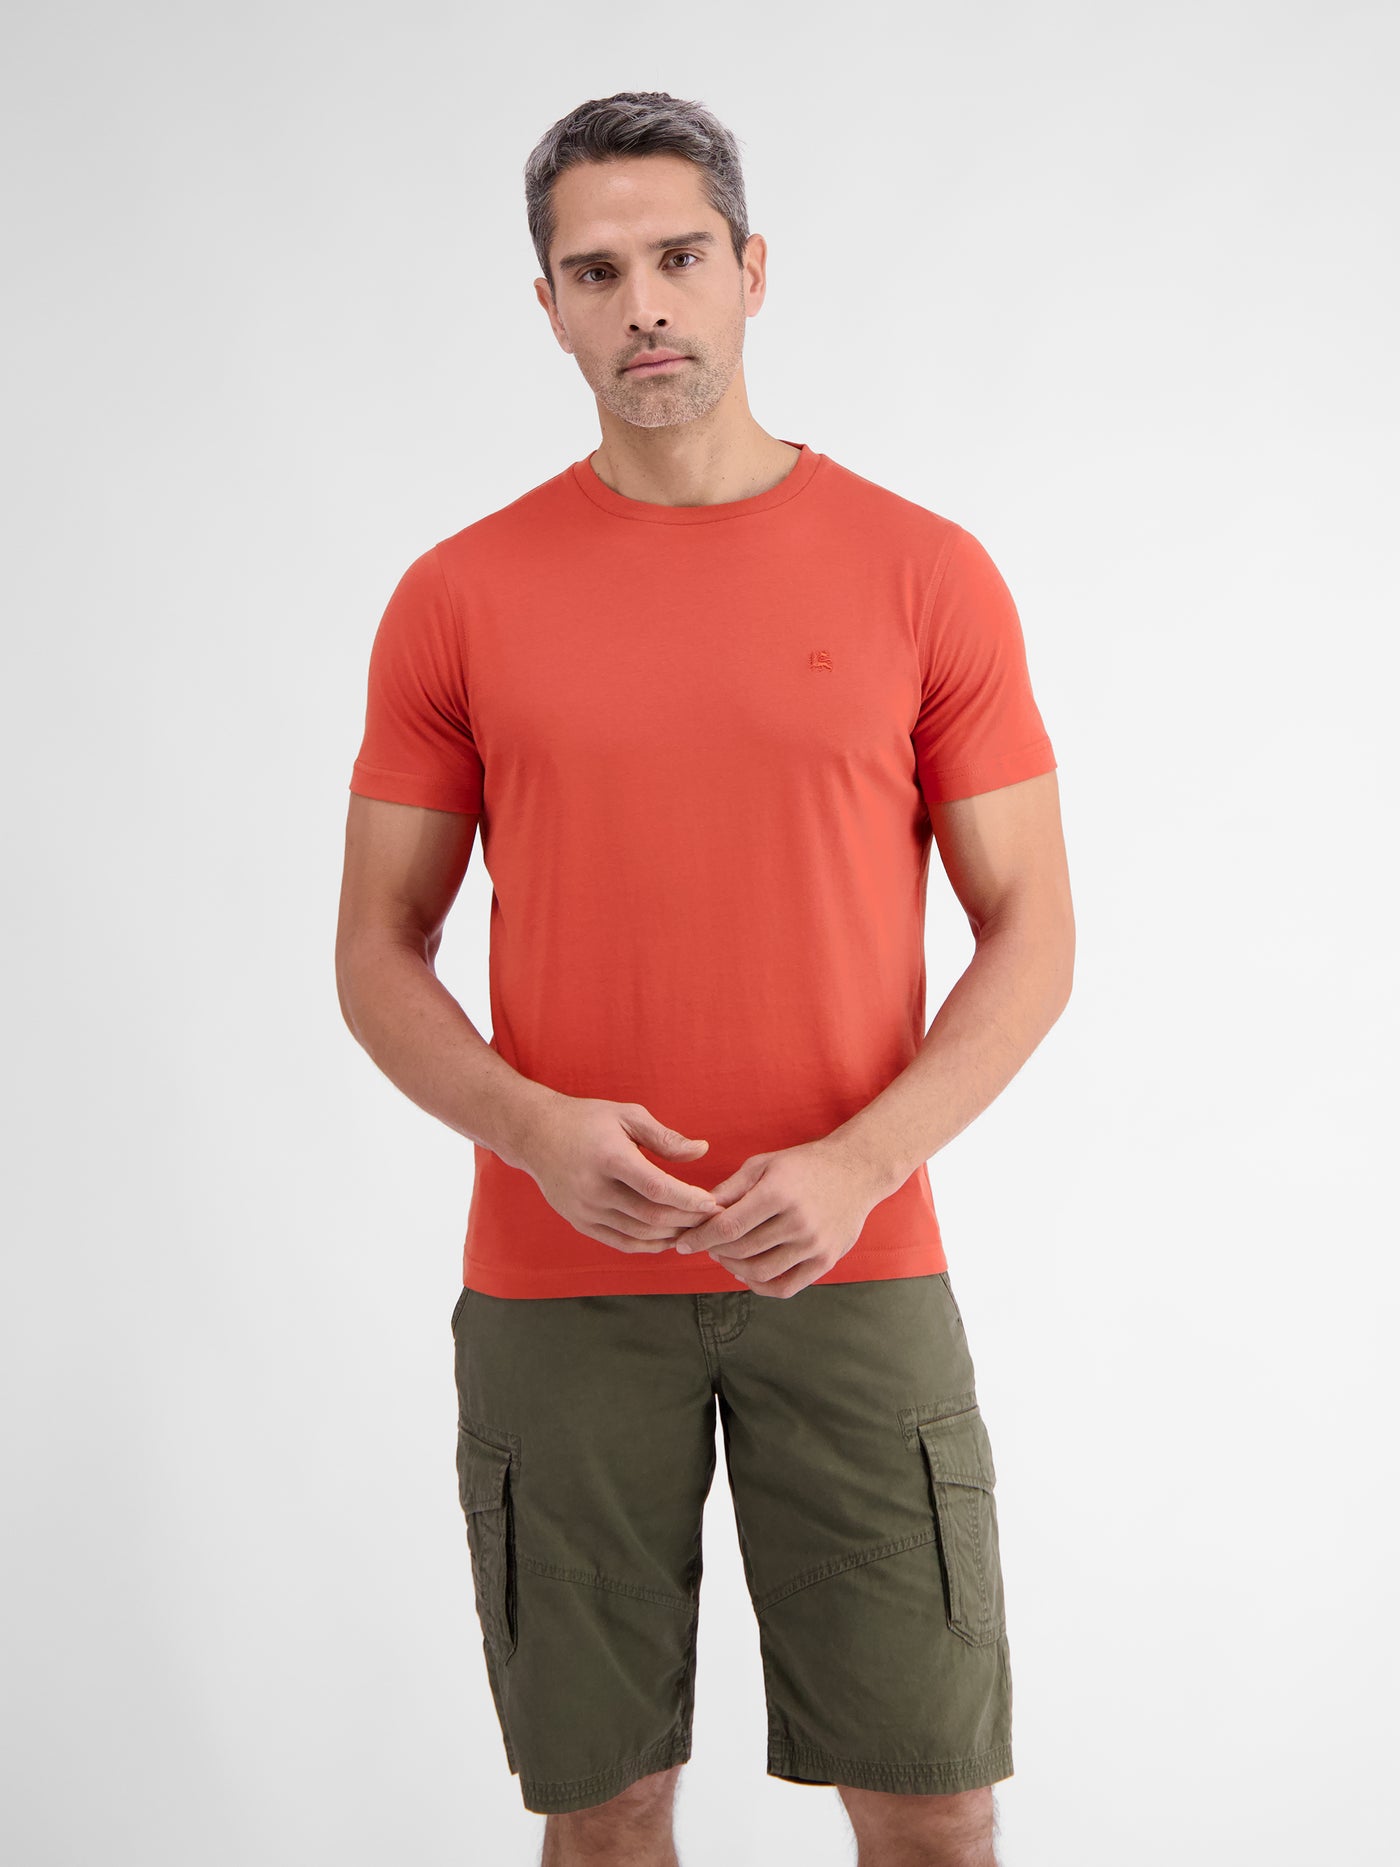 Plain-colored basic T-shirt with logo stitch